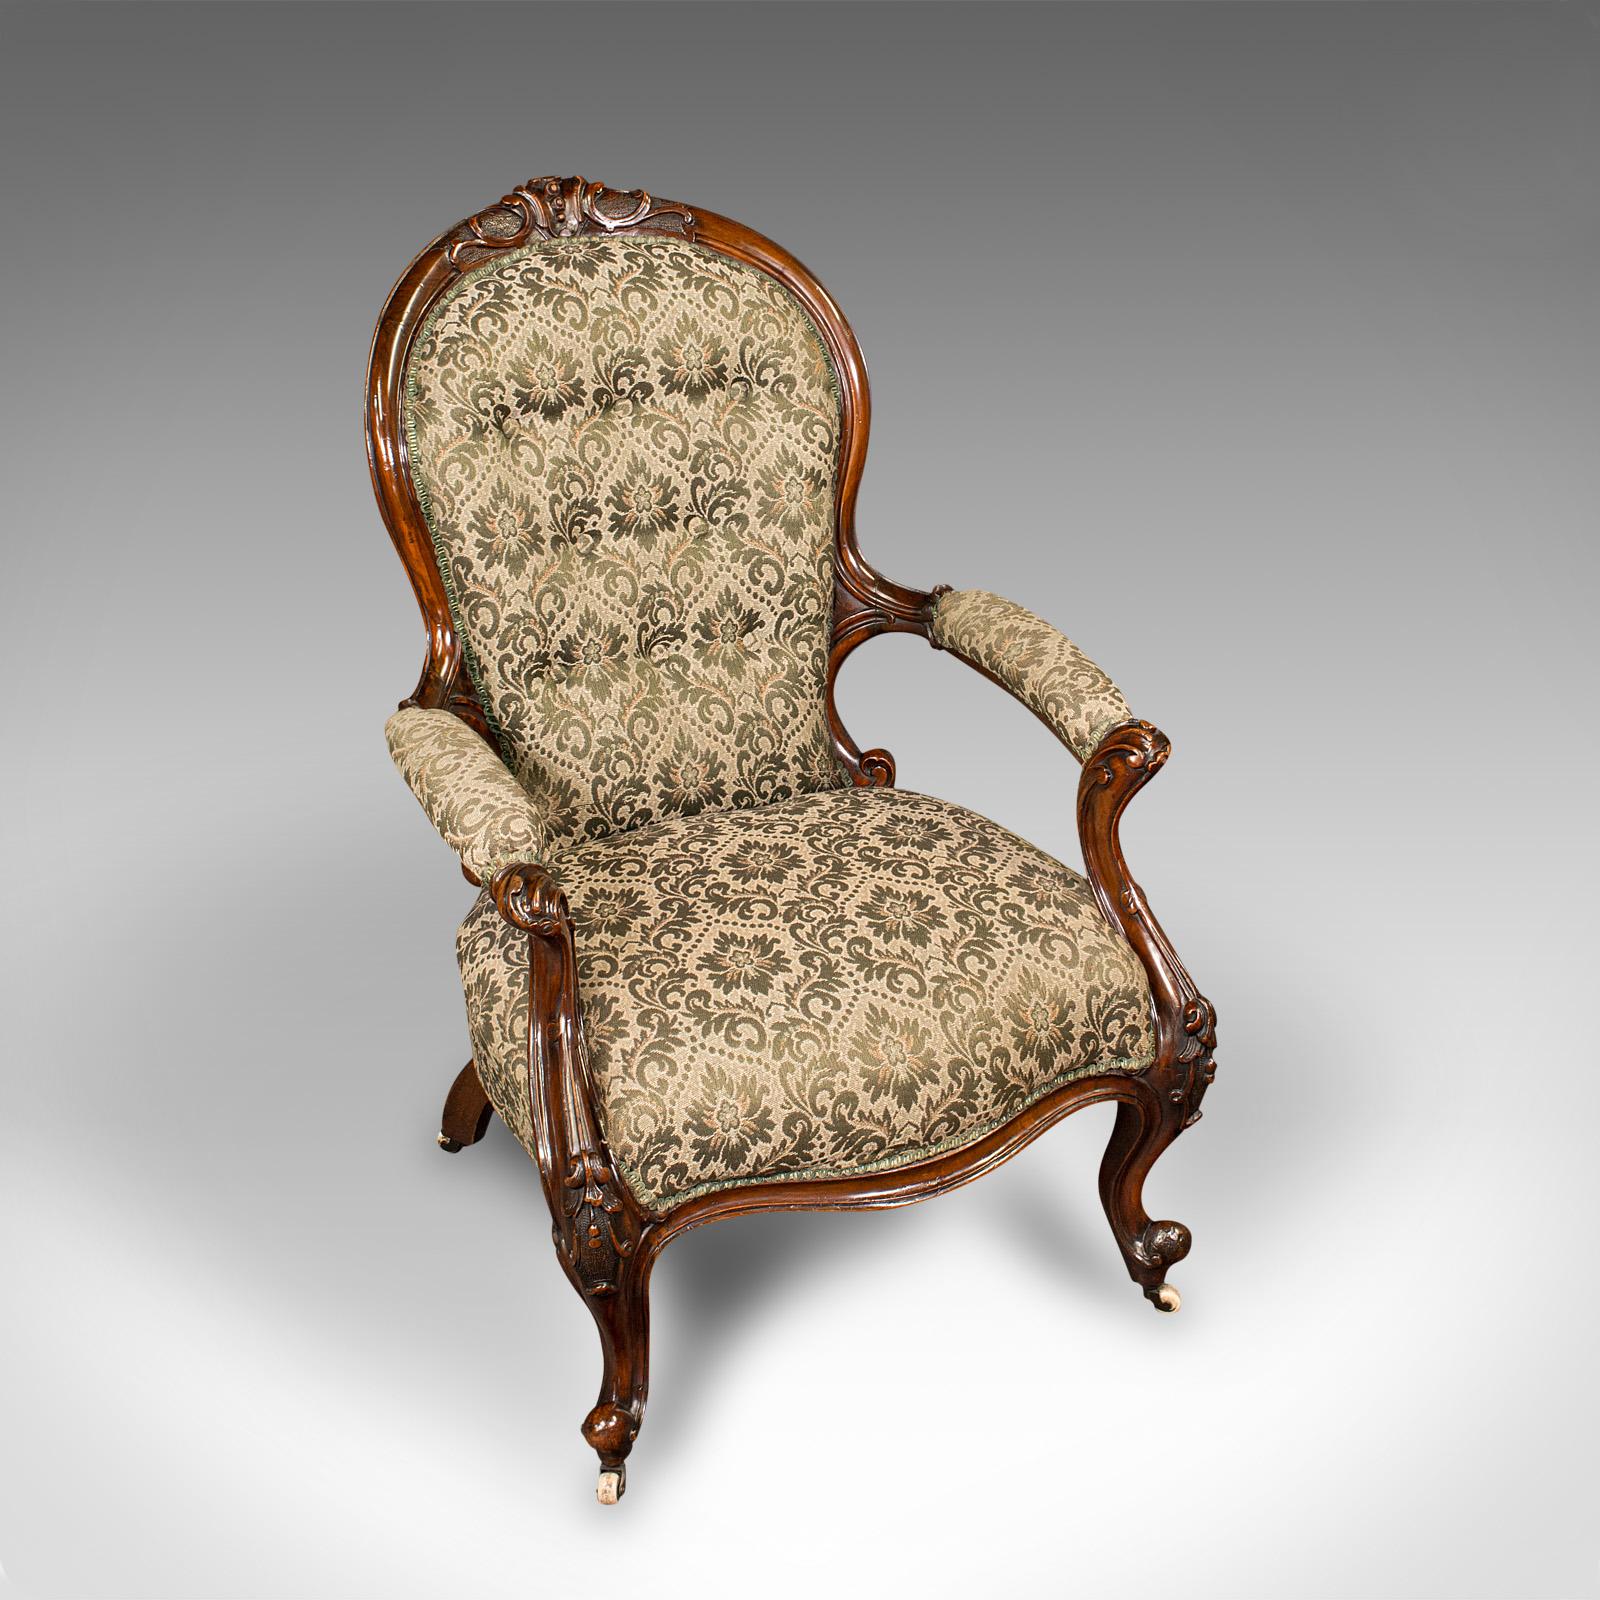 British Antique Salon Chair, English, Walnut, Armchair, Early Victorian, circa 1840 For Sale